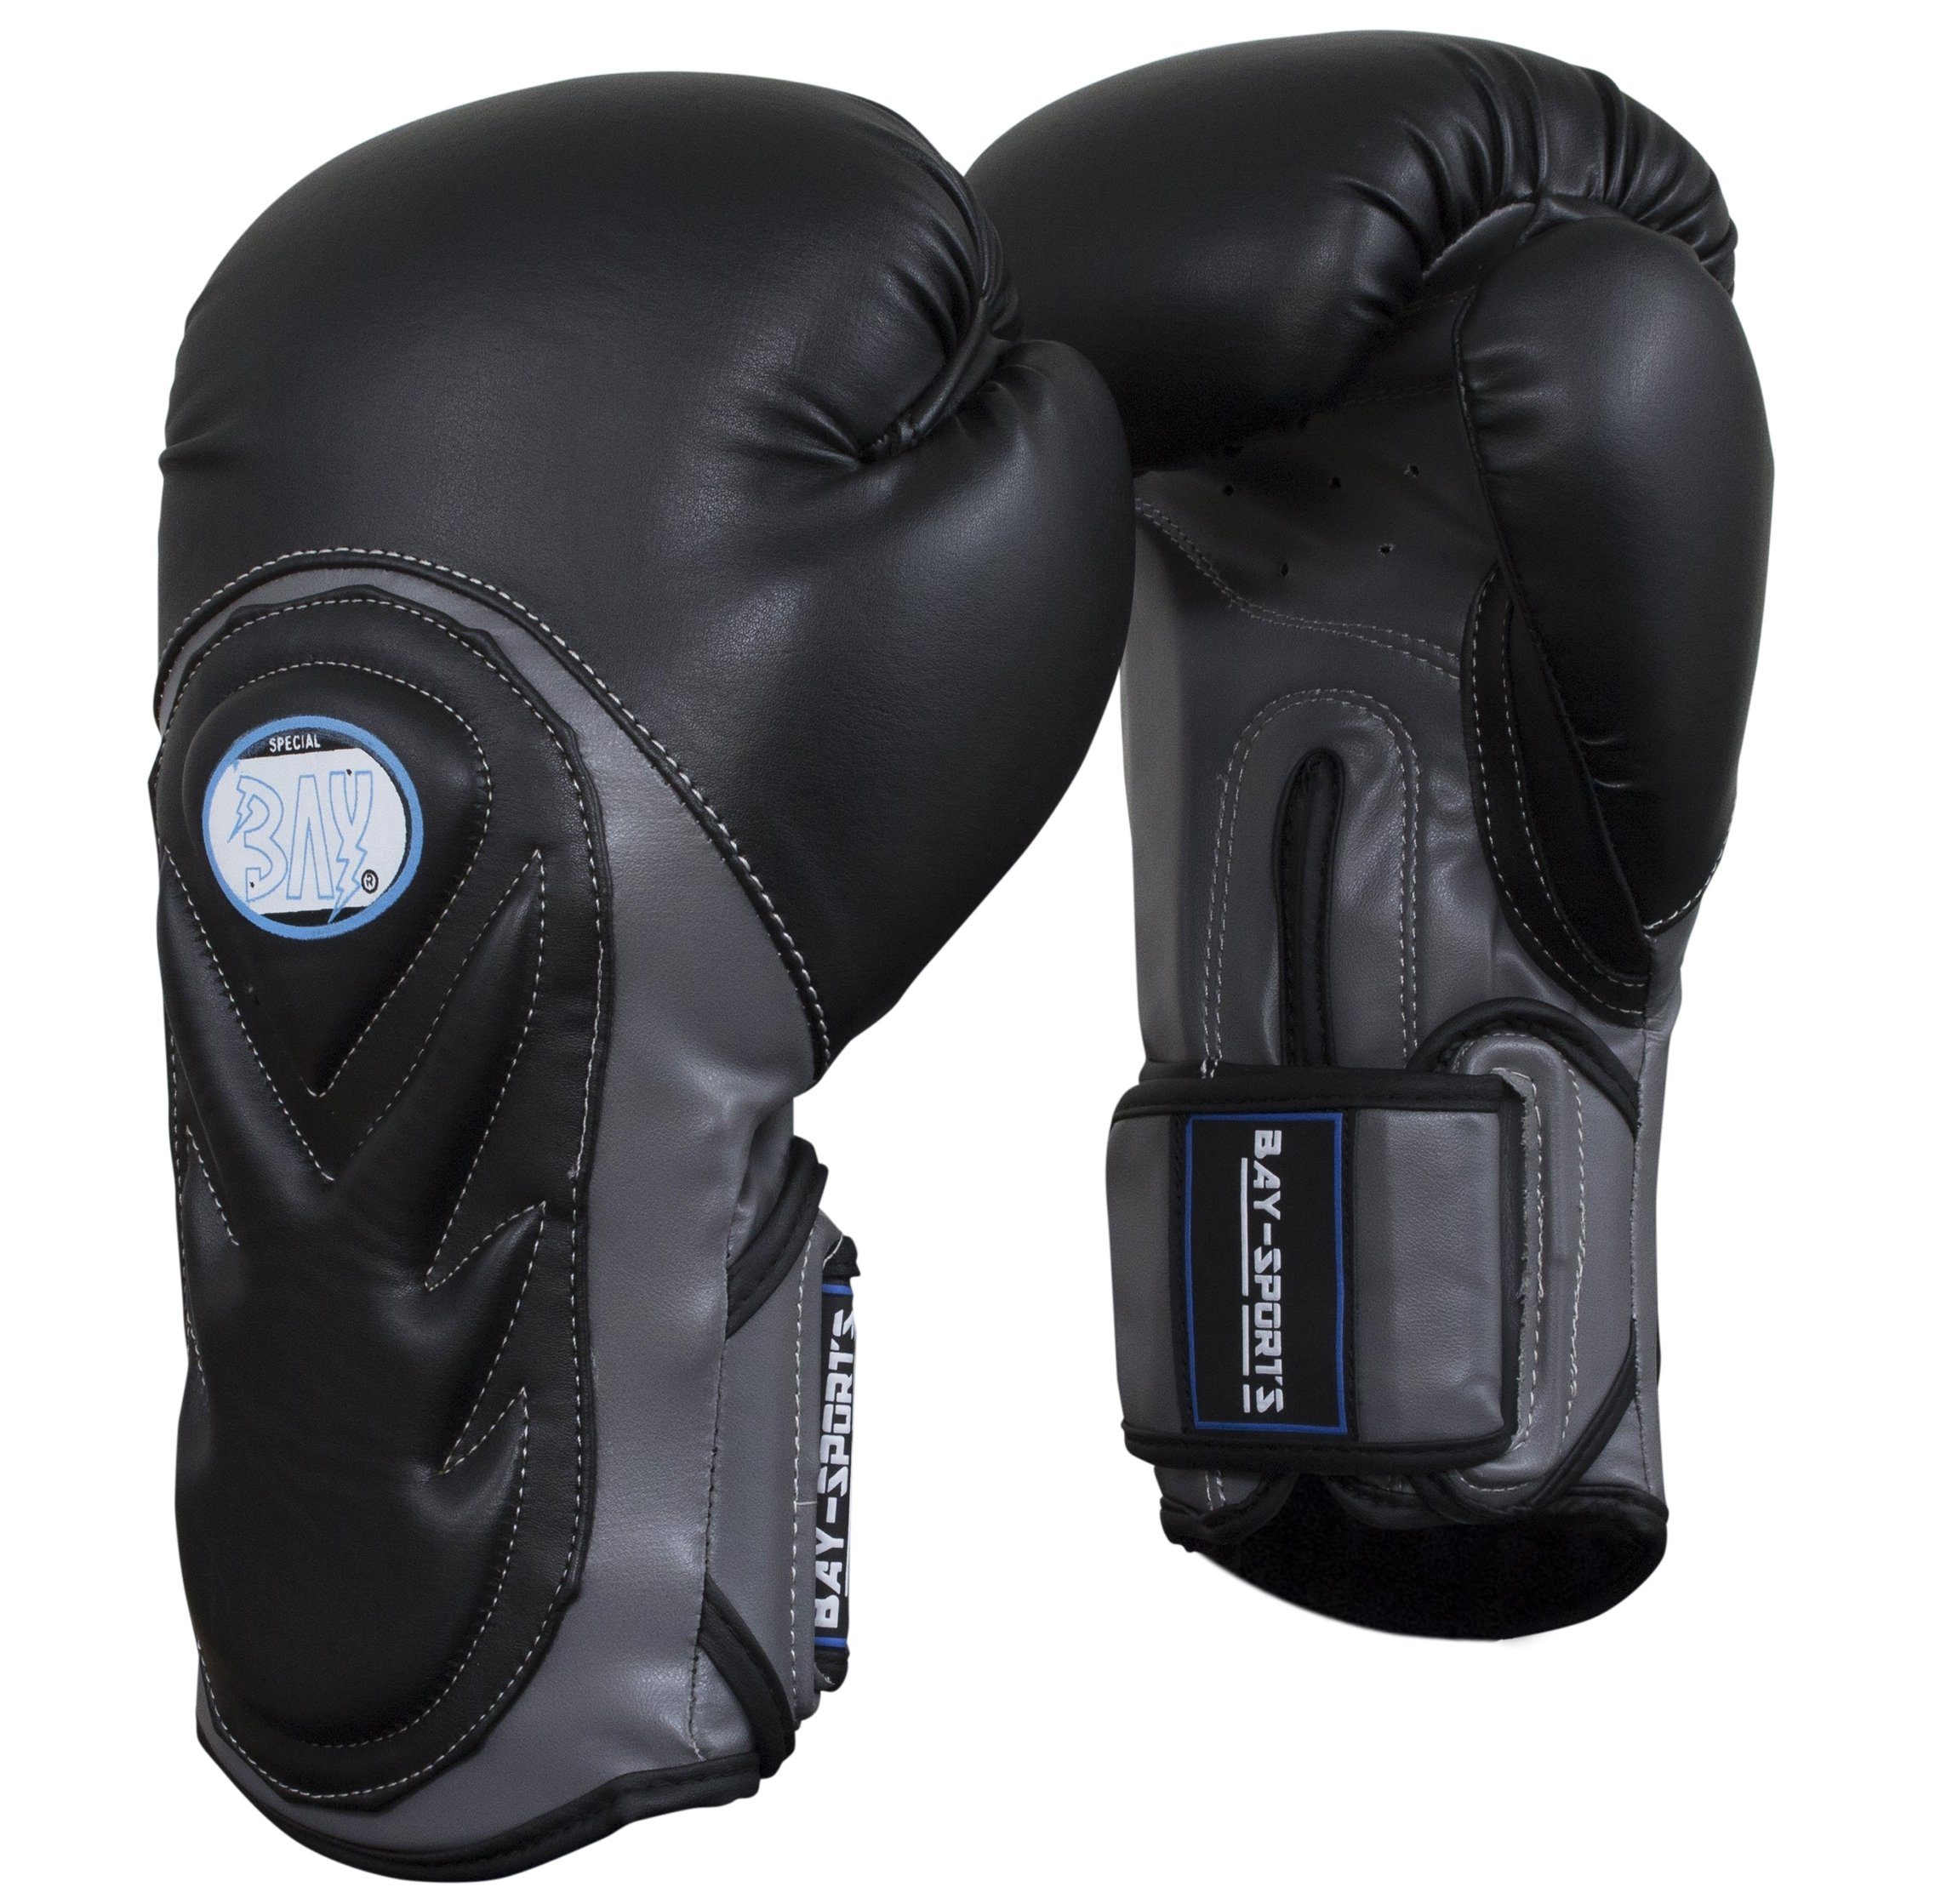 BAY-Sports Boxhandschuhe Bad Style Box-Handschuhe schwarz/grau Boxen Kickboxen